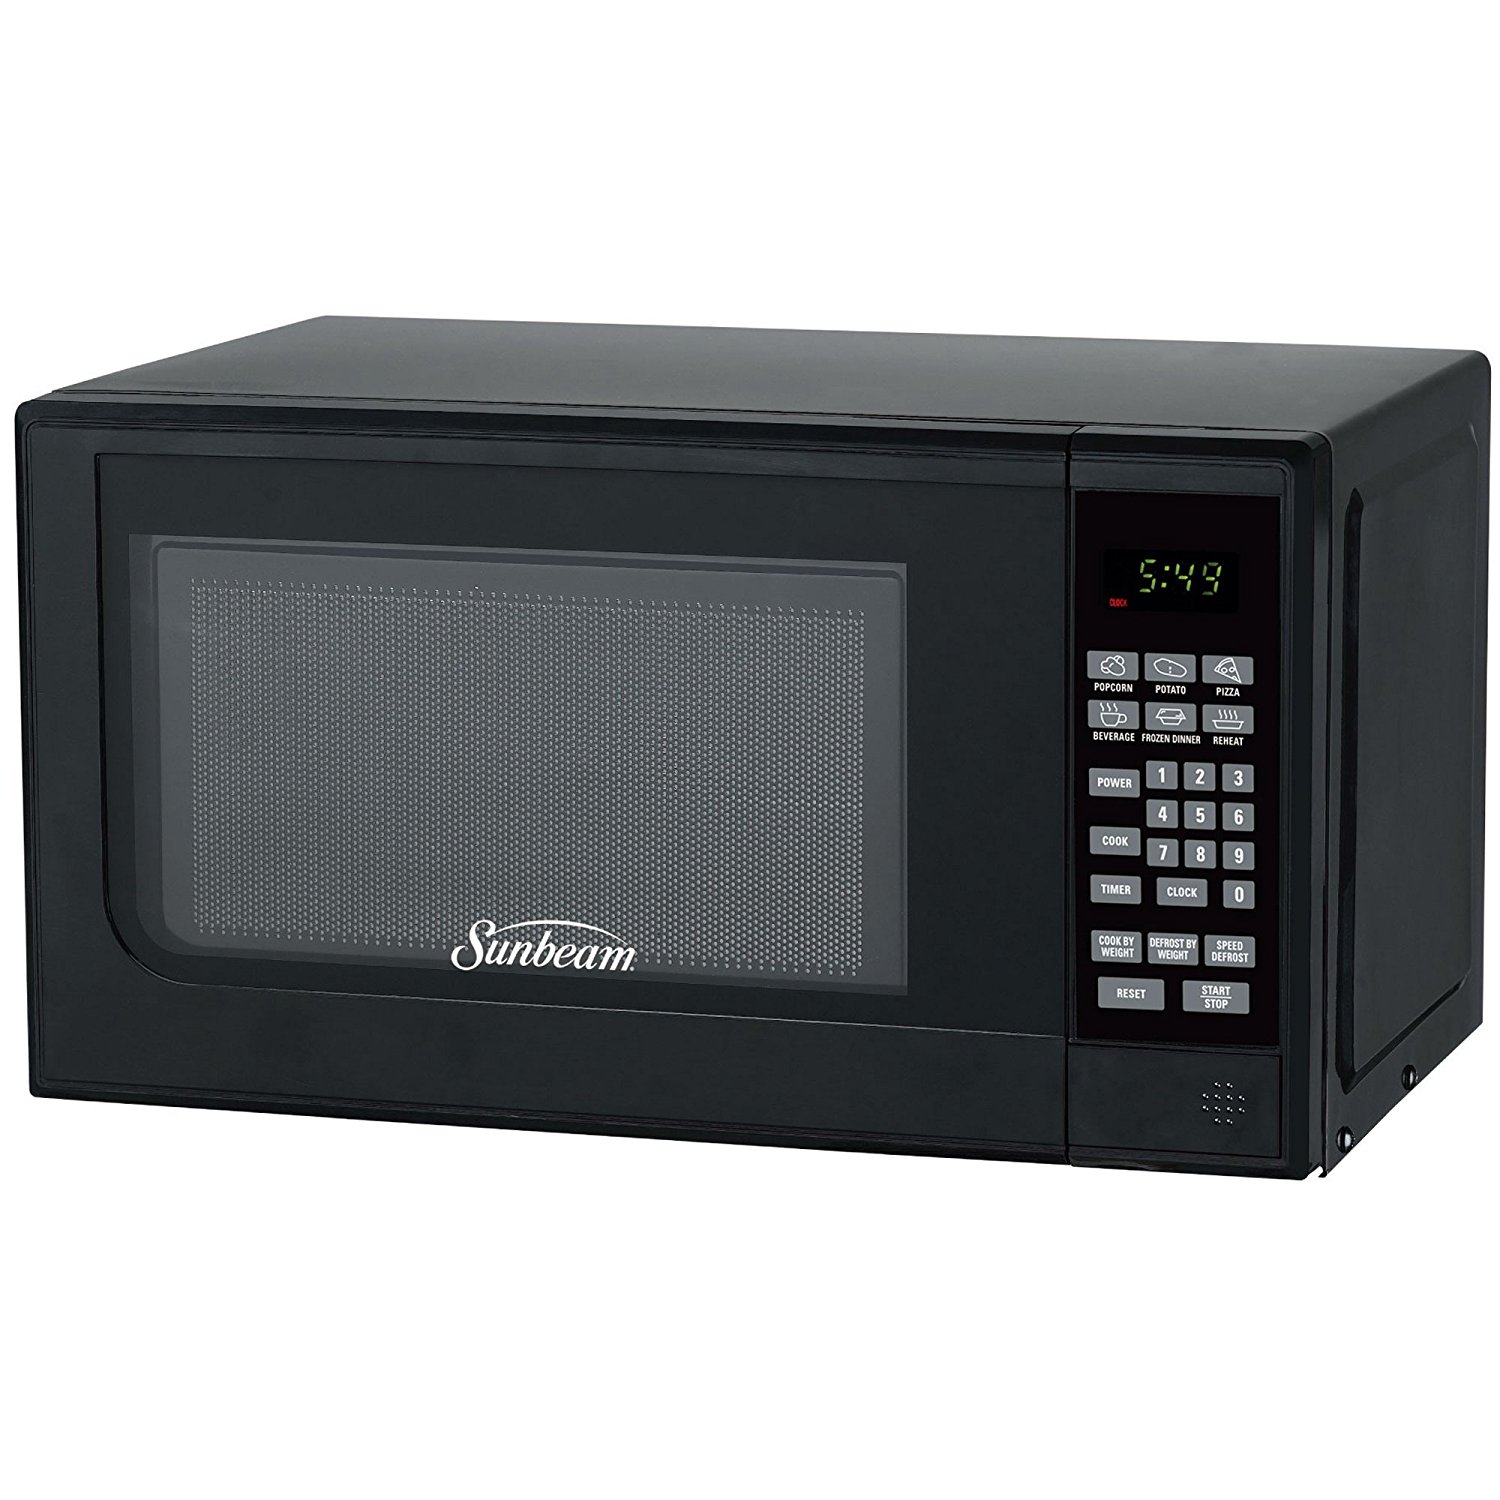 Sunbeam SGC7702 0.7 Cu. Ft. 700 Watts Compact Digital Microwave Oven, Black